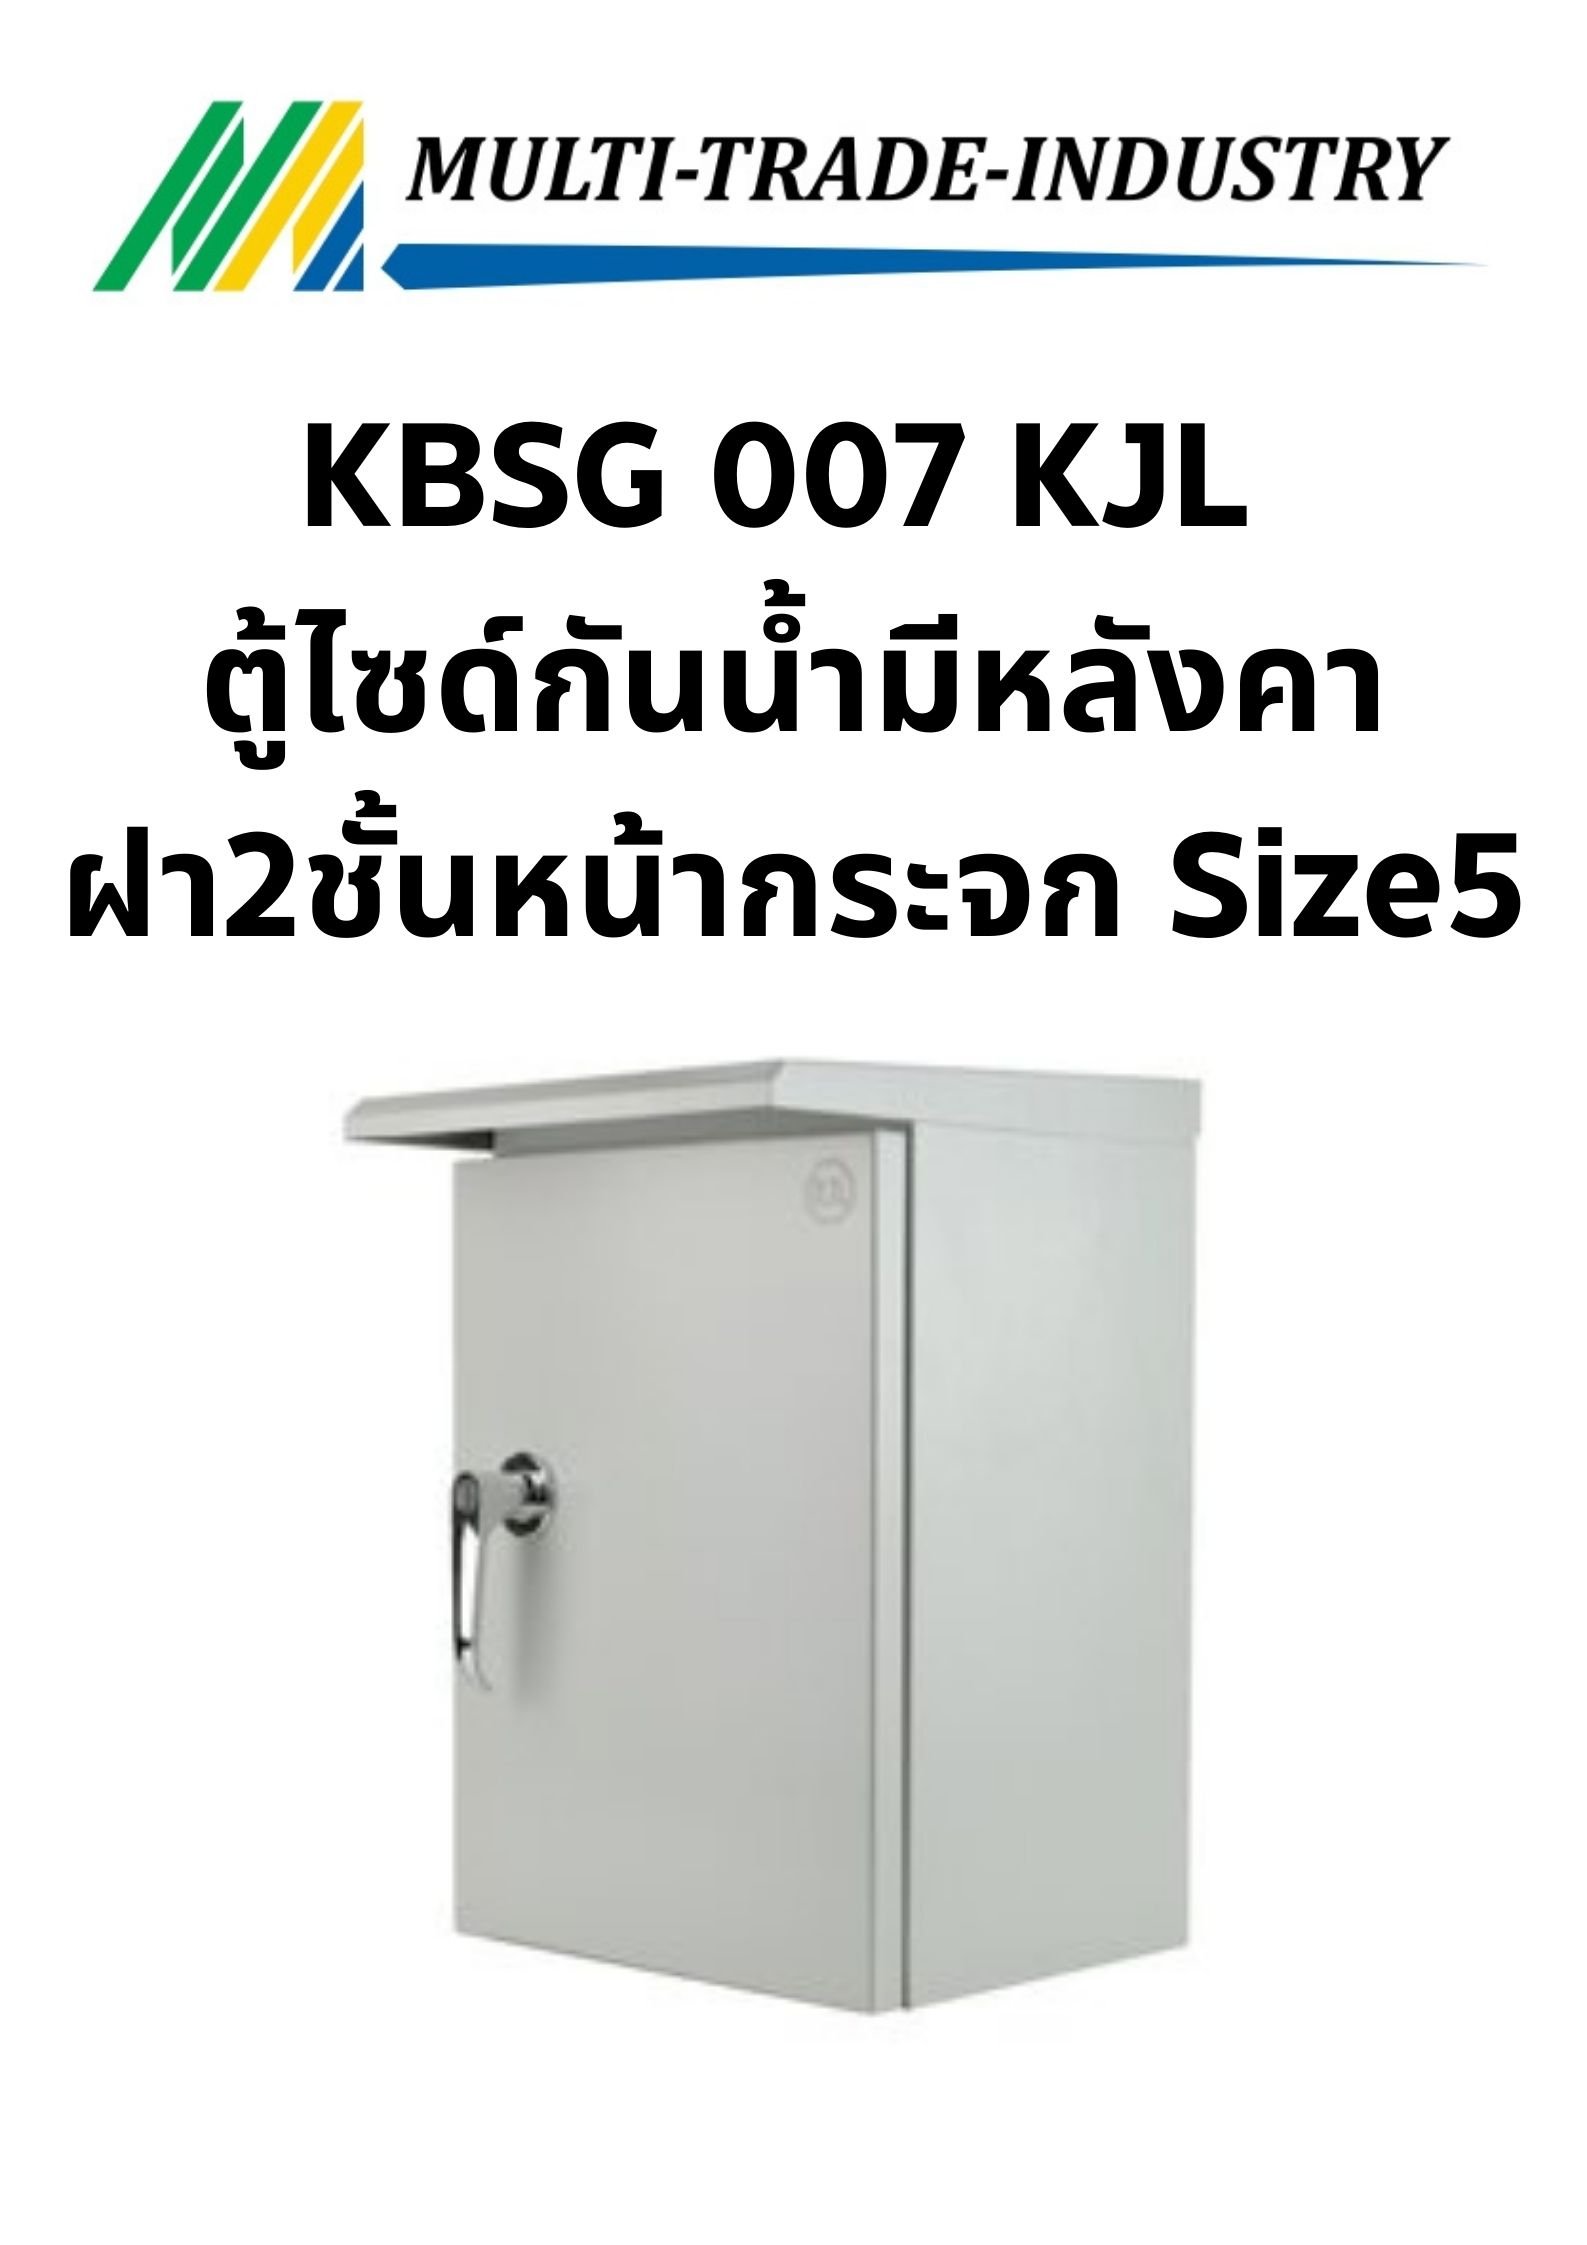 KBSG 007 KJL ตู้ไซด์กันน้ำมีหลังคา ฝา2ชั้นหน้ากระจก Size5 570x690x250